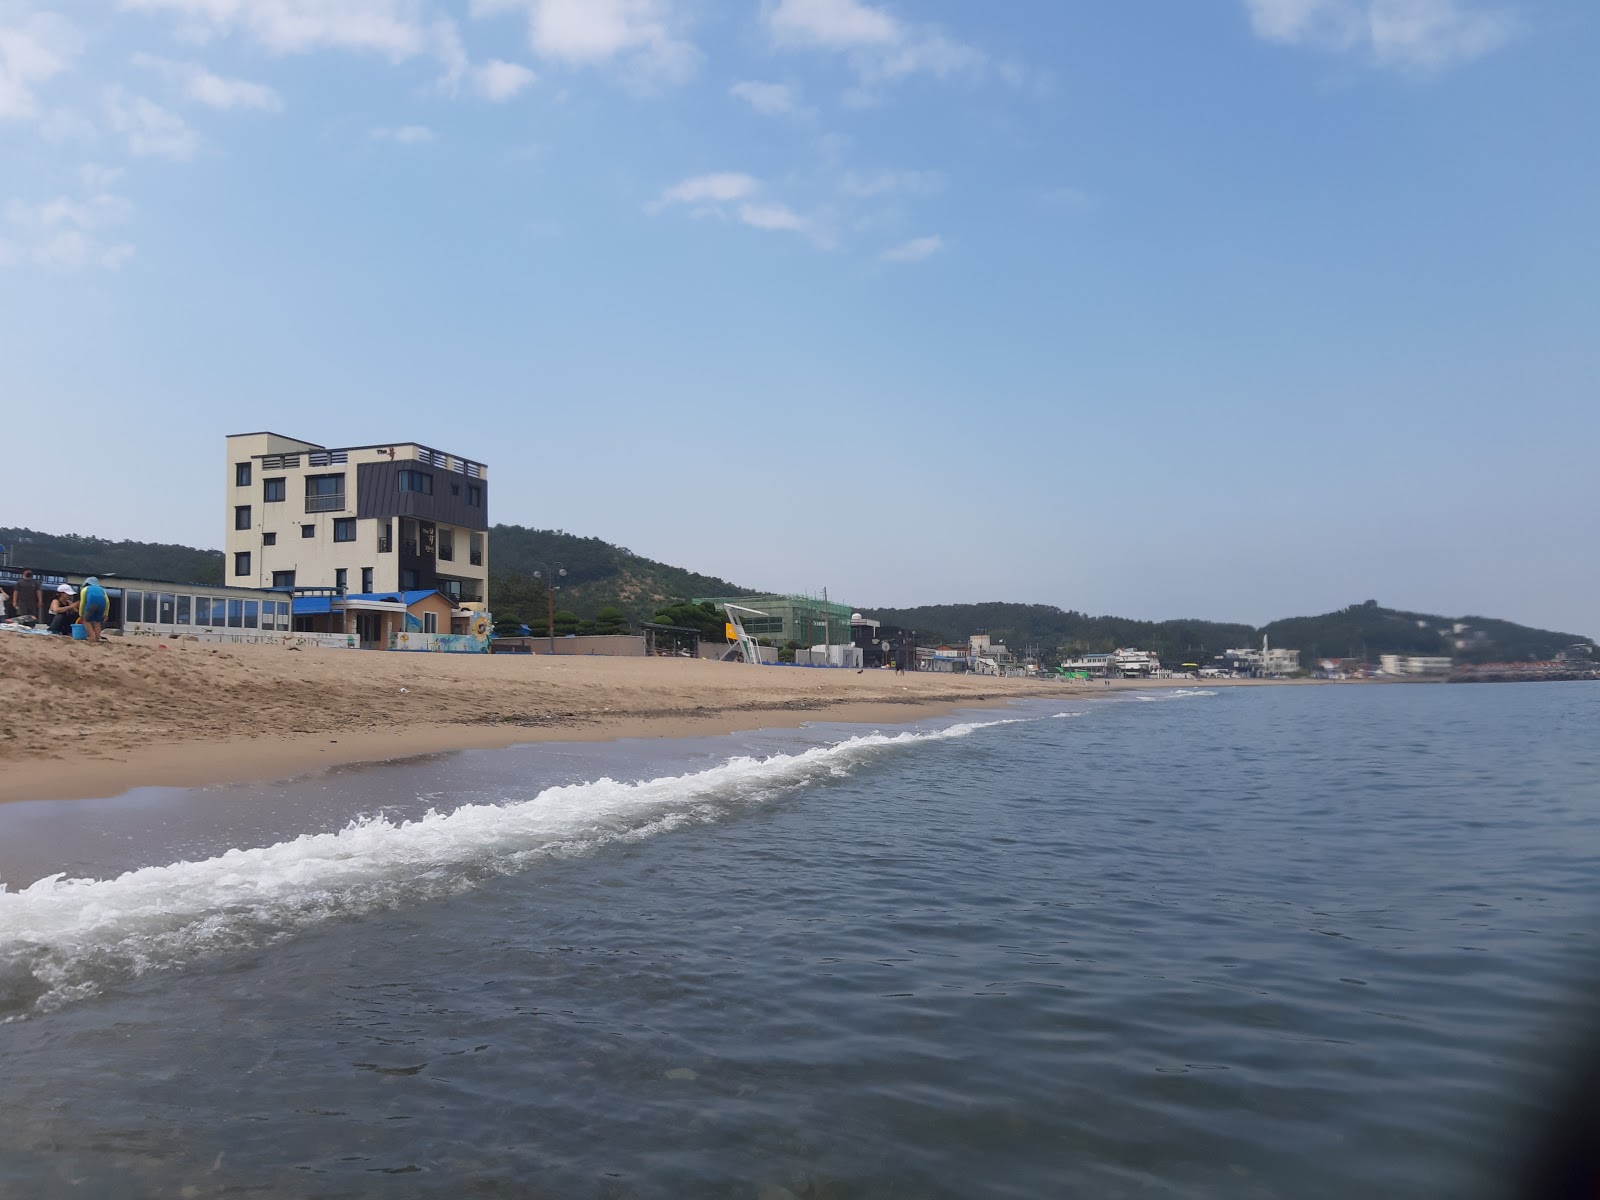 Foto de Imrang Beach - lugar popular entre os apreciadores de relaxamento